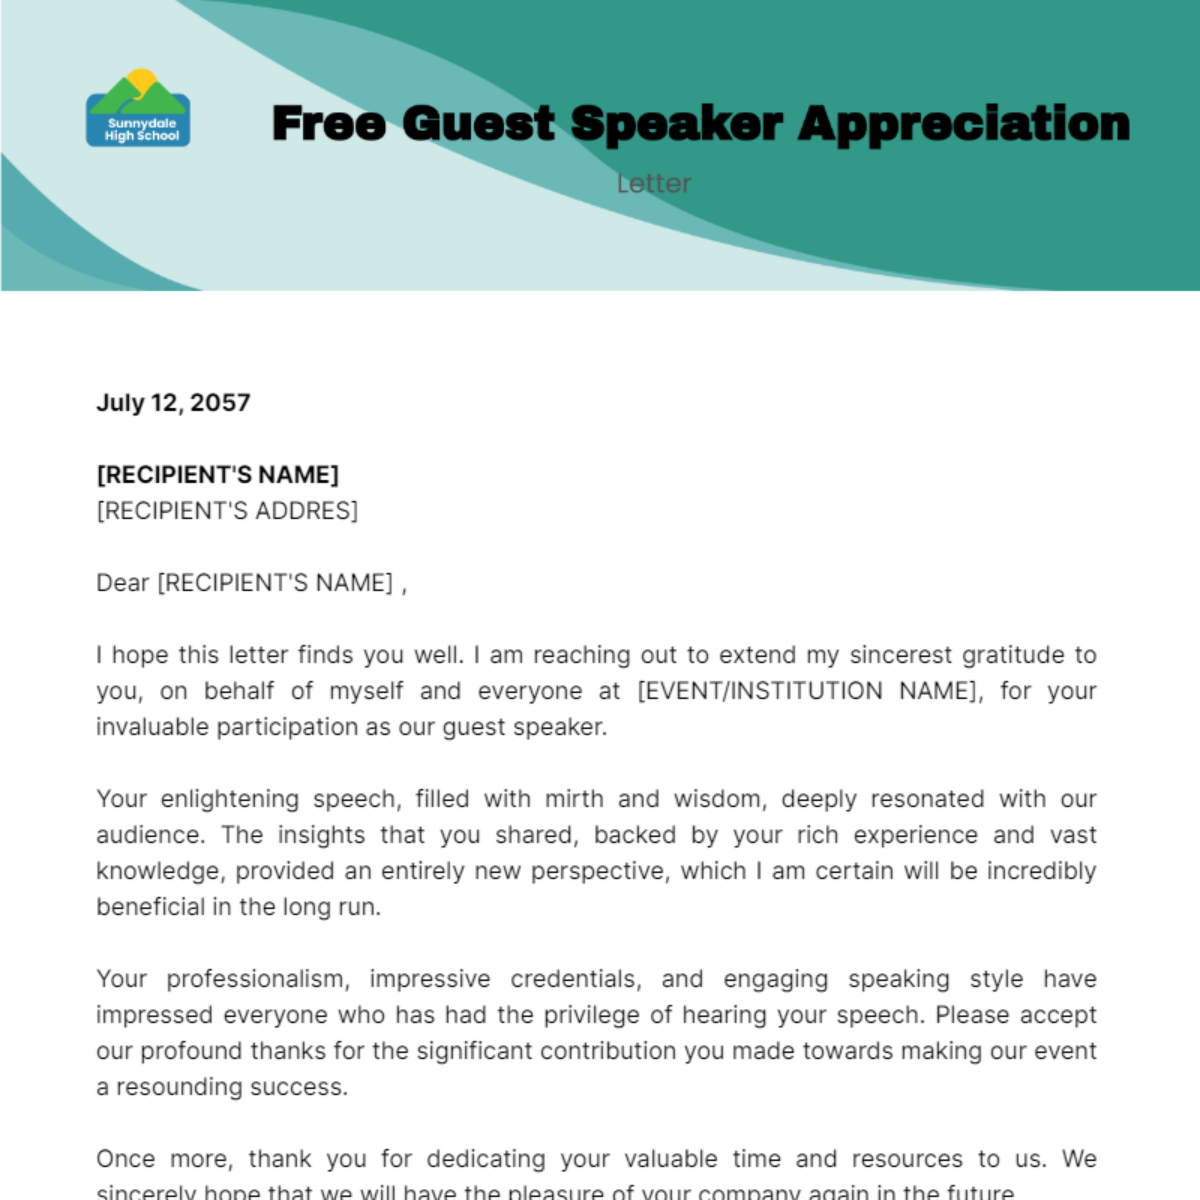 Guest Speaker Appreciation Letter Template